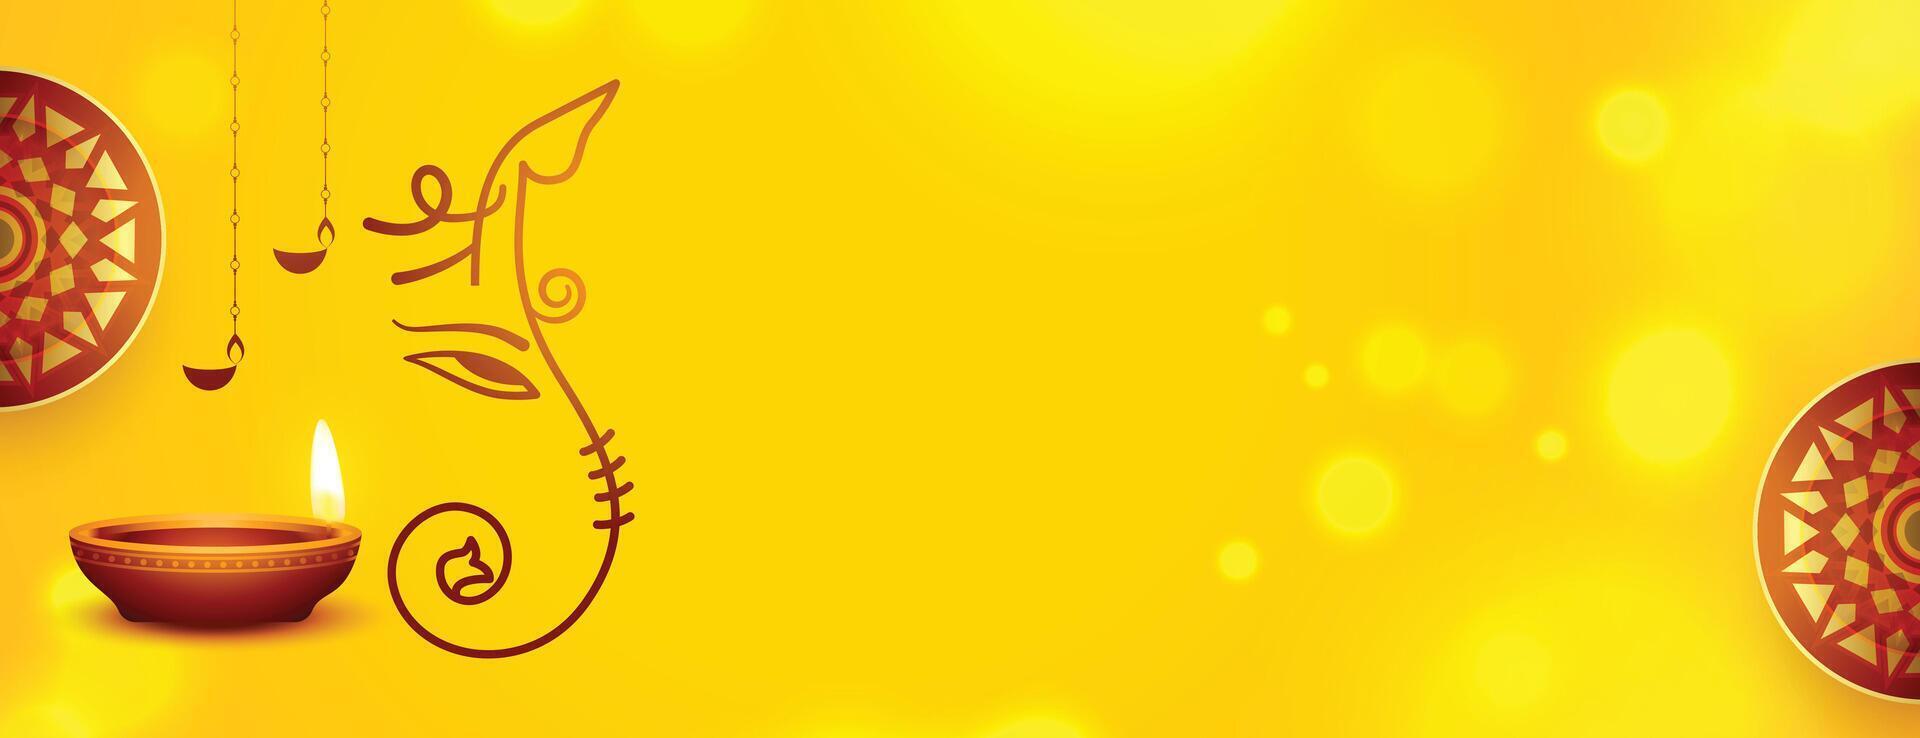 hindu tradicional ganesh chaturthi festival amarelo bandeira com diya vetor